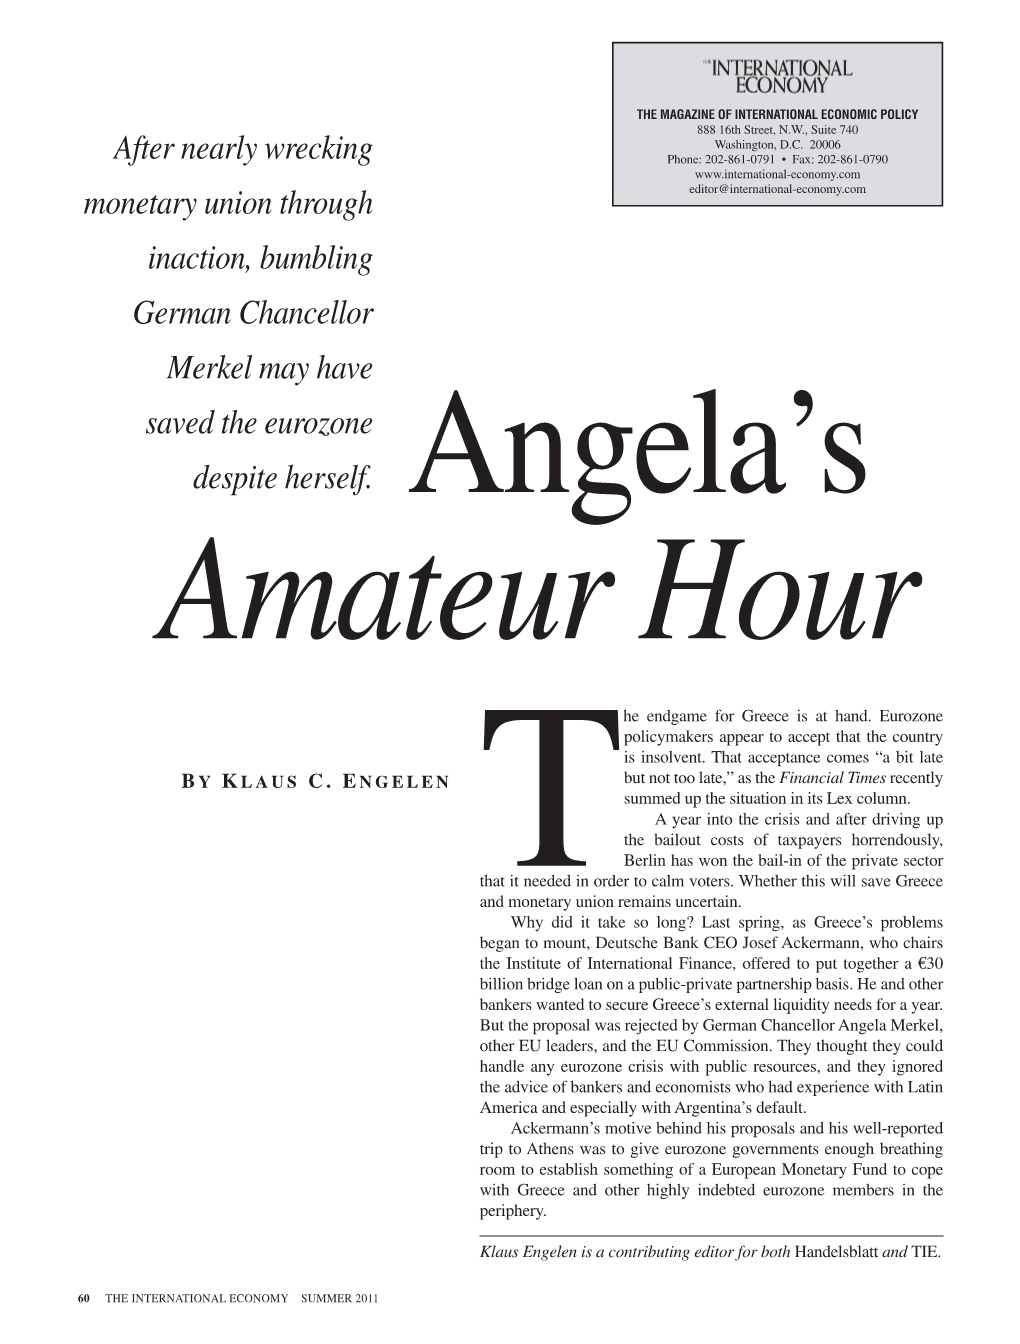 Angela's Amateur Hour